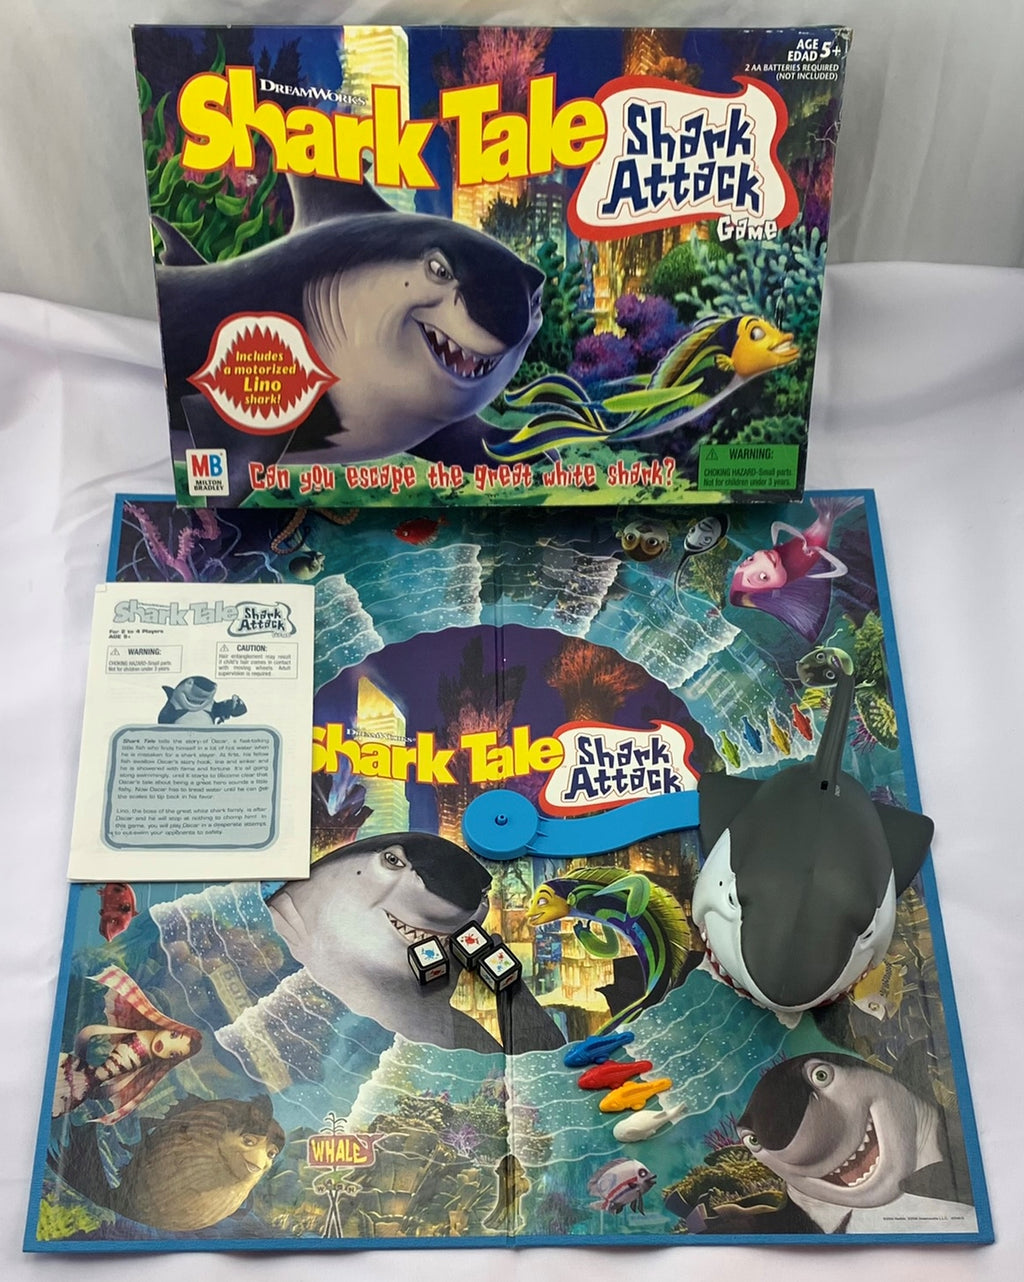 Shark Attack Game - 1988 - Milton Bradley - Great Condition